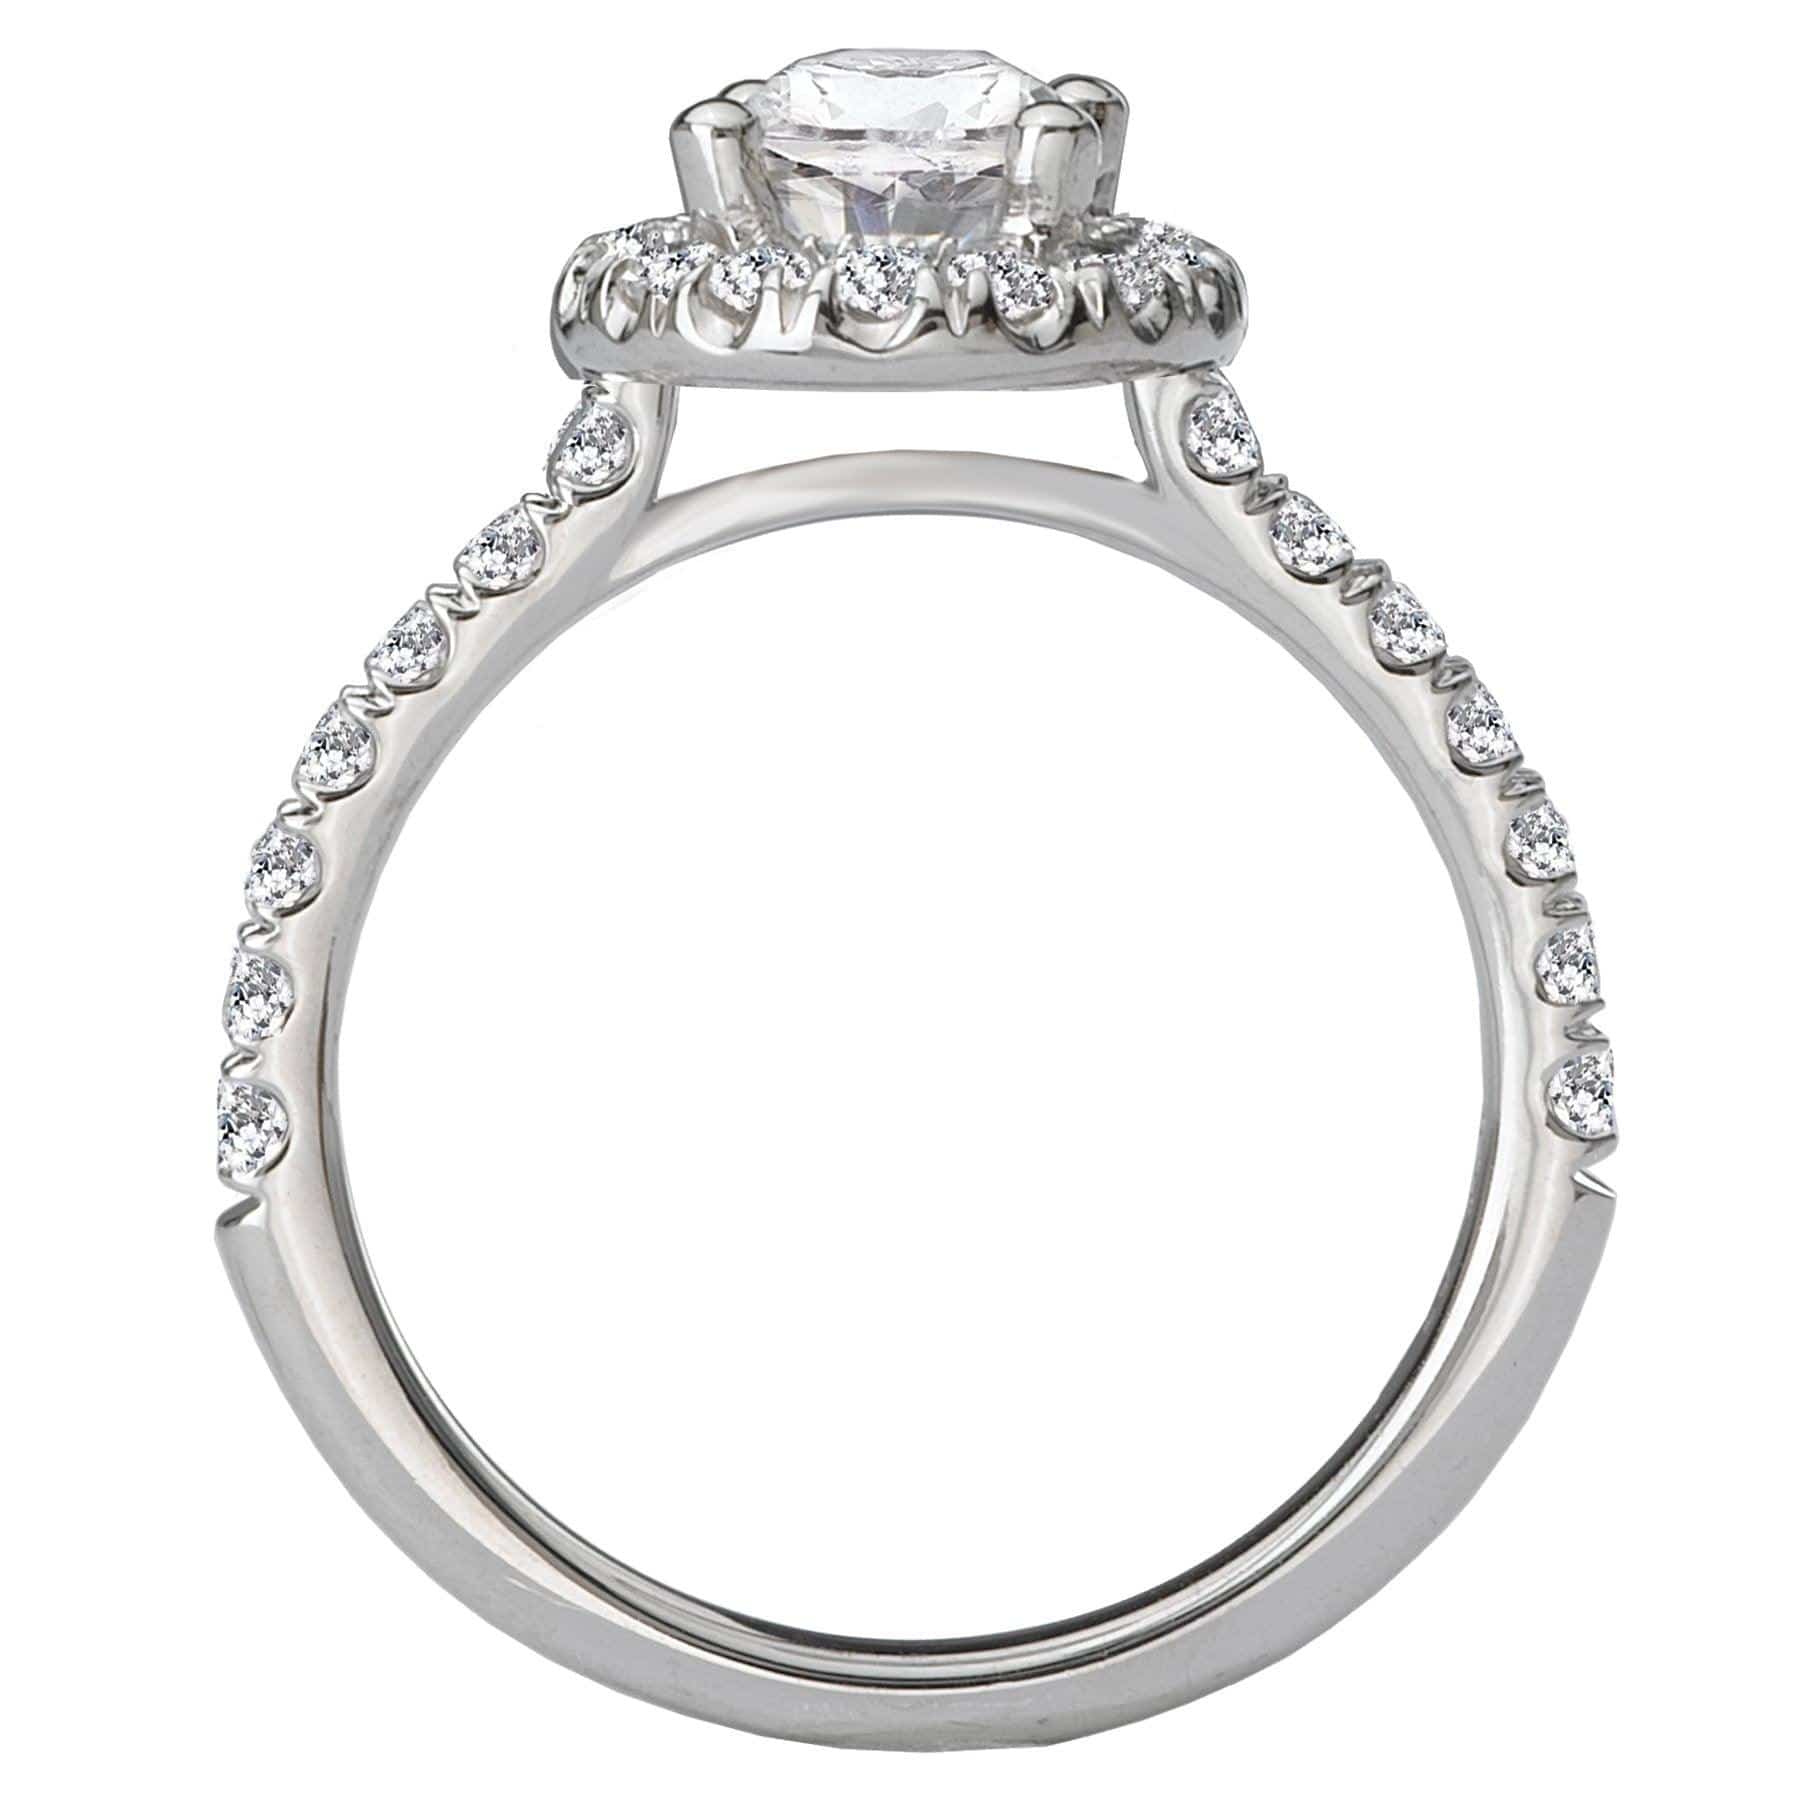 BW JAMES Engagement Rings "The Aurora" Halo Semi-Mount Diamond Ring